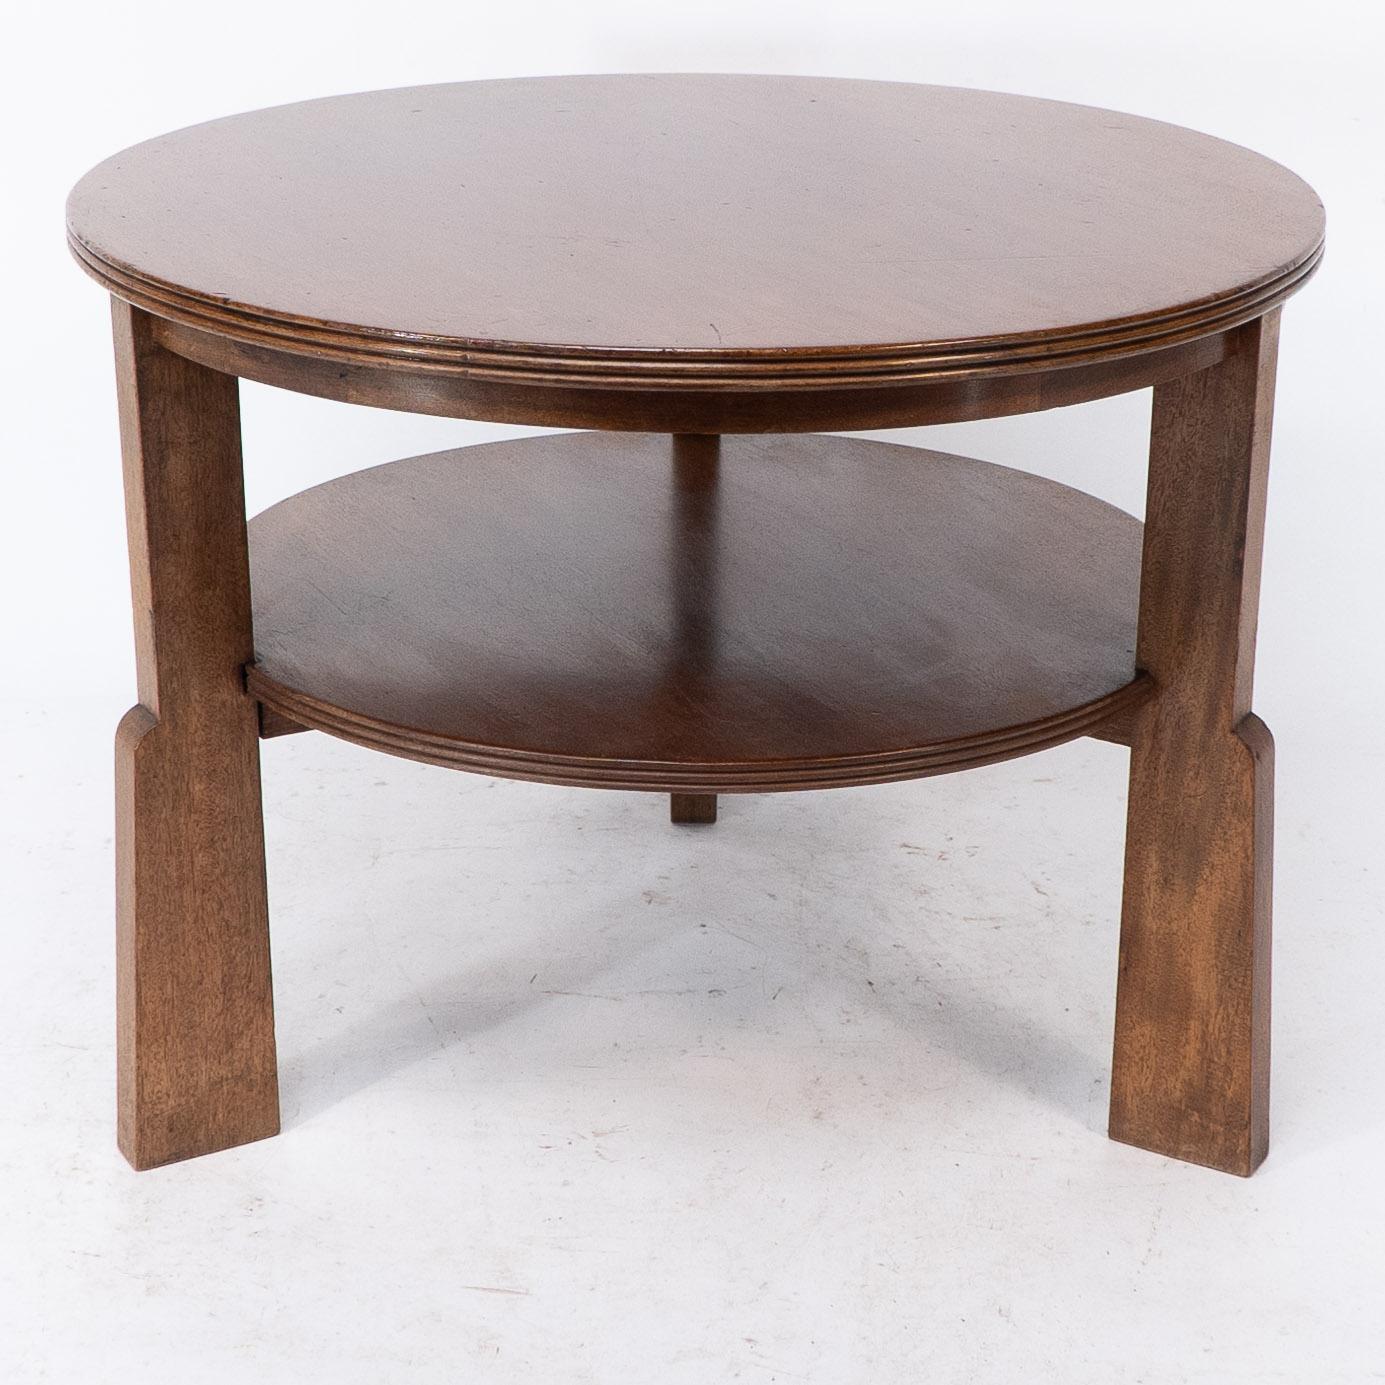 English Gordon Russell. A gunstock figured walnut coffee table on gunstock shaped legs